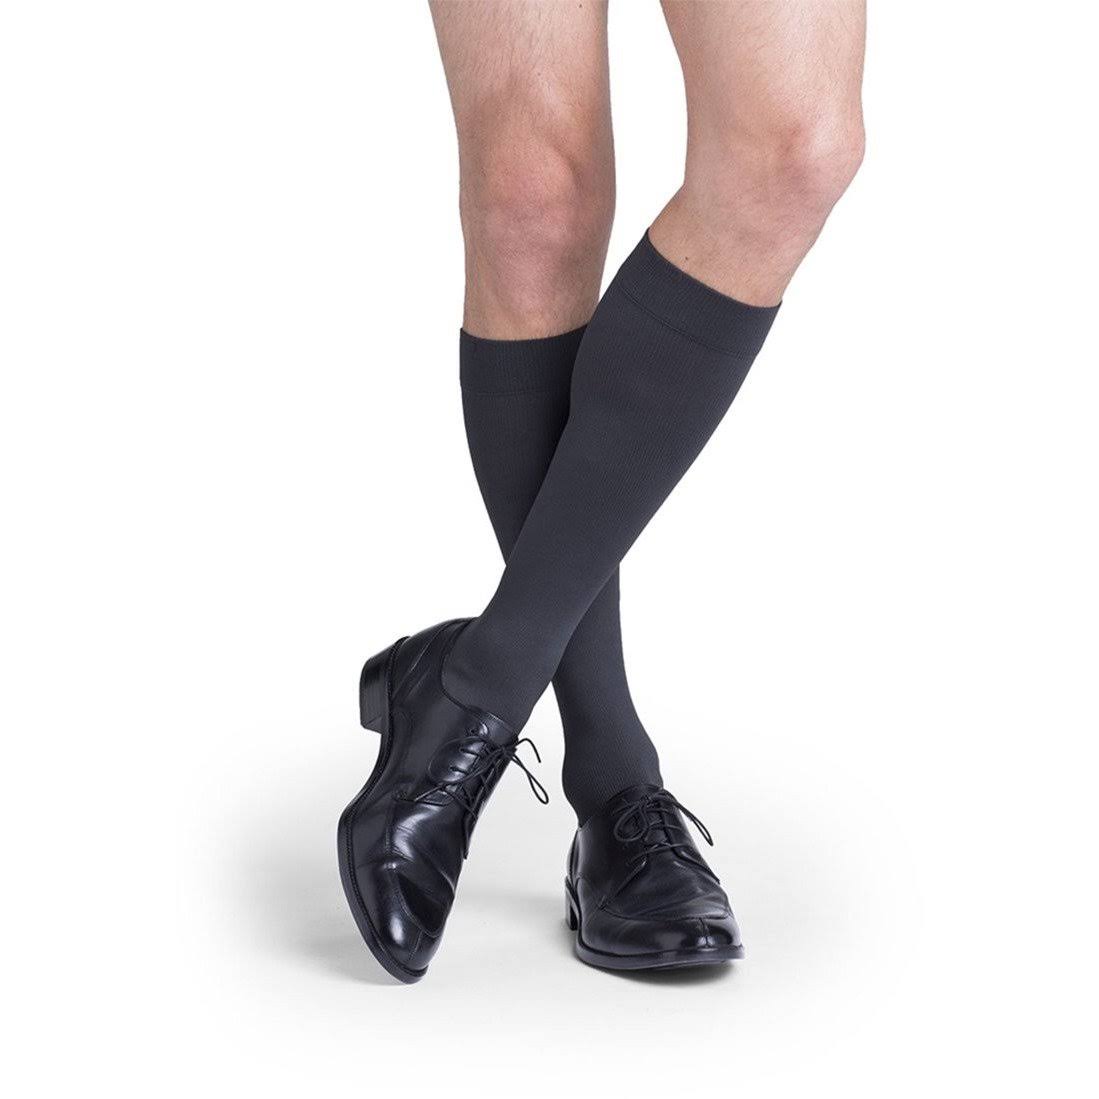 Sigvaris Men's Midtown Microfiber Socks - Tan, Small, 15 to 20 mmhg